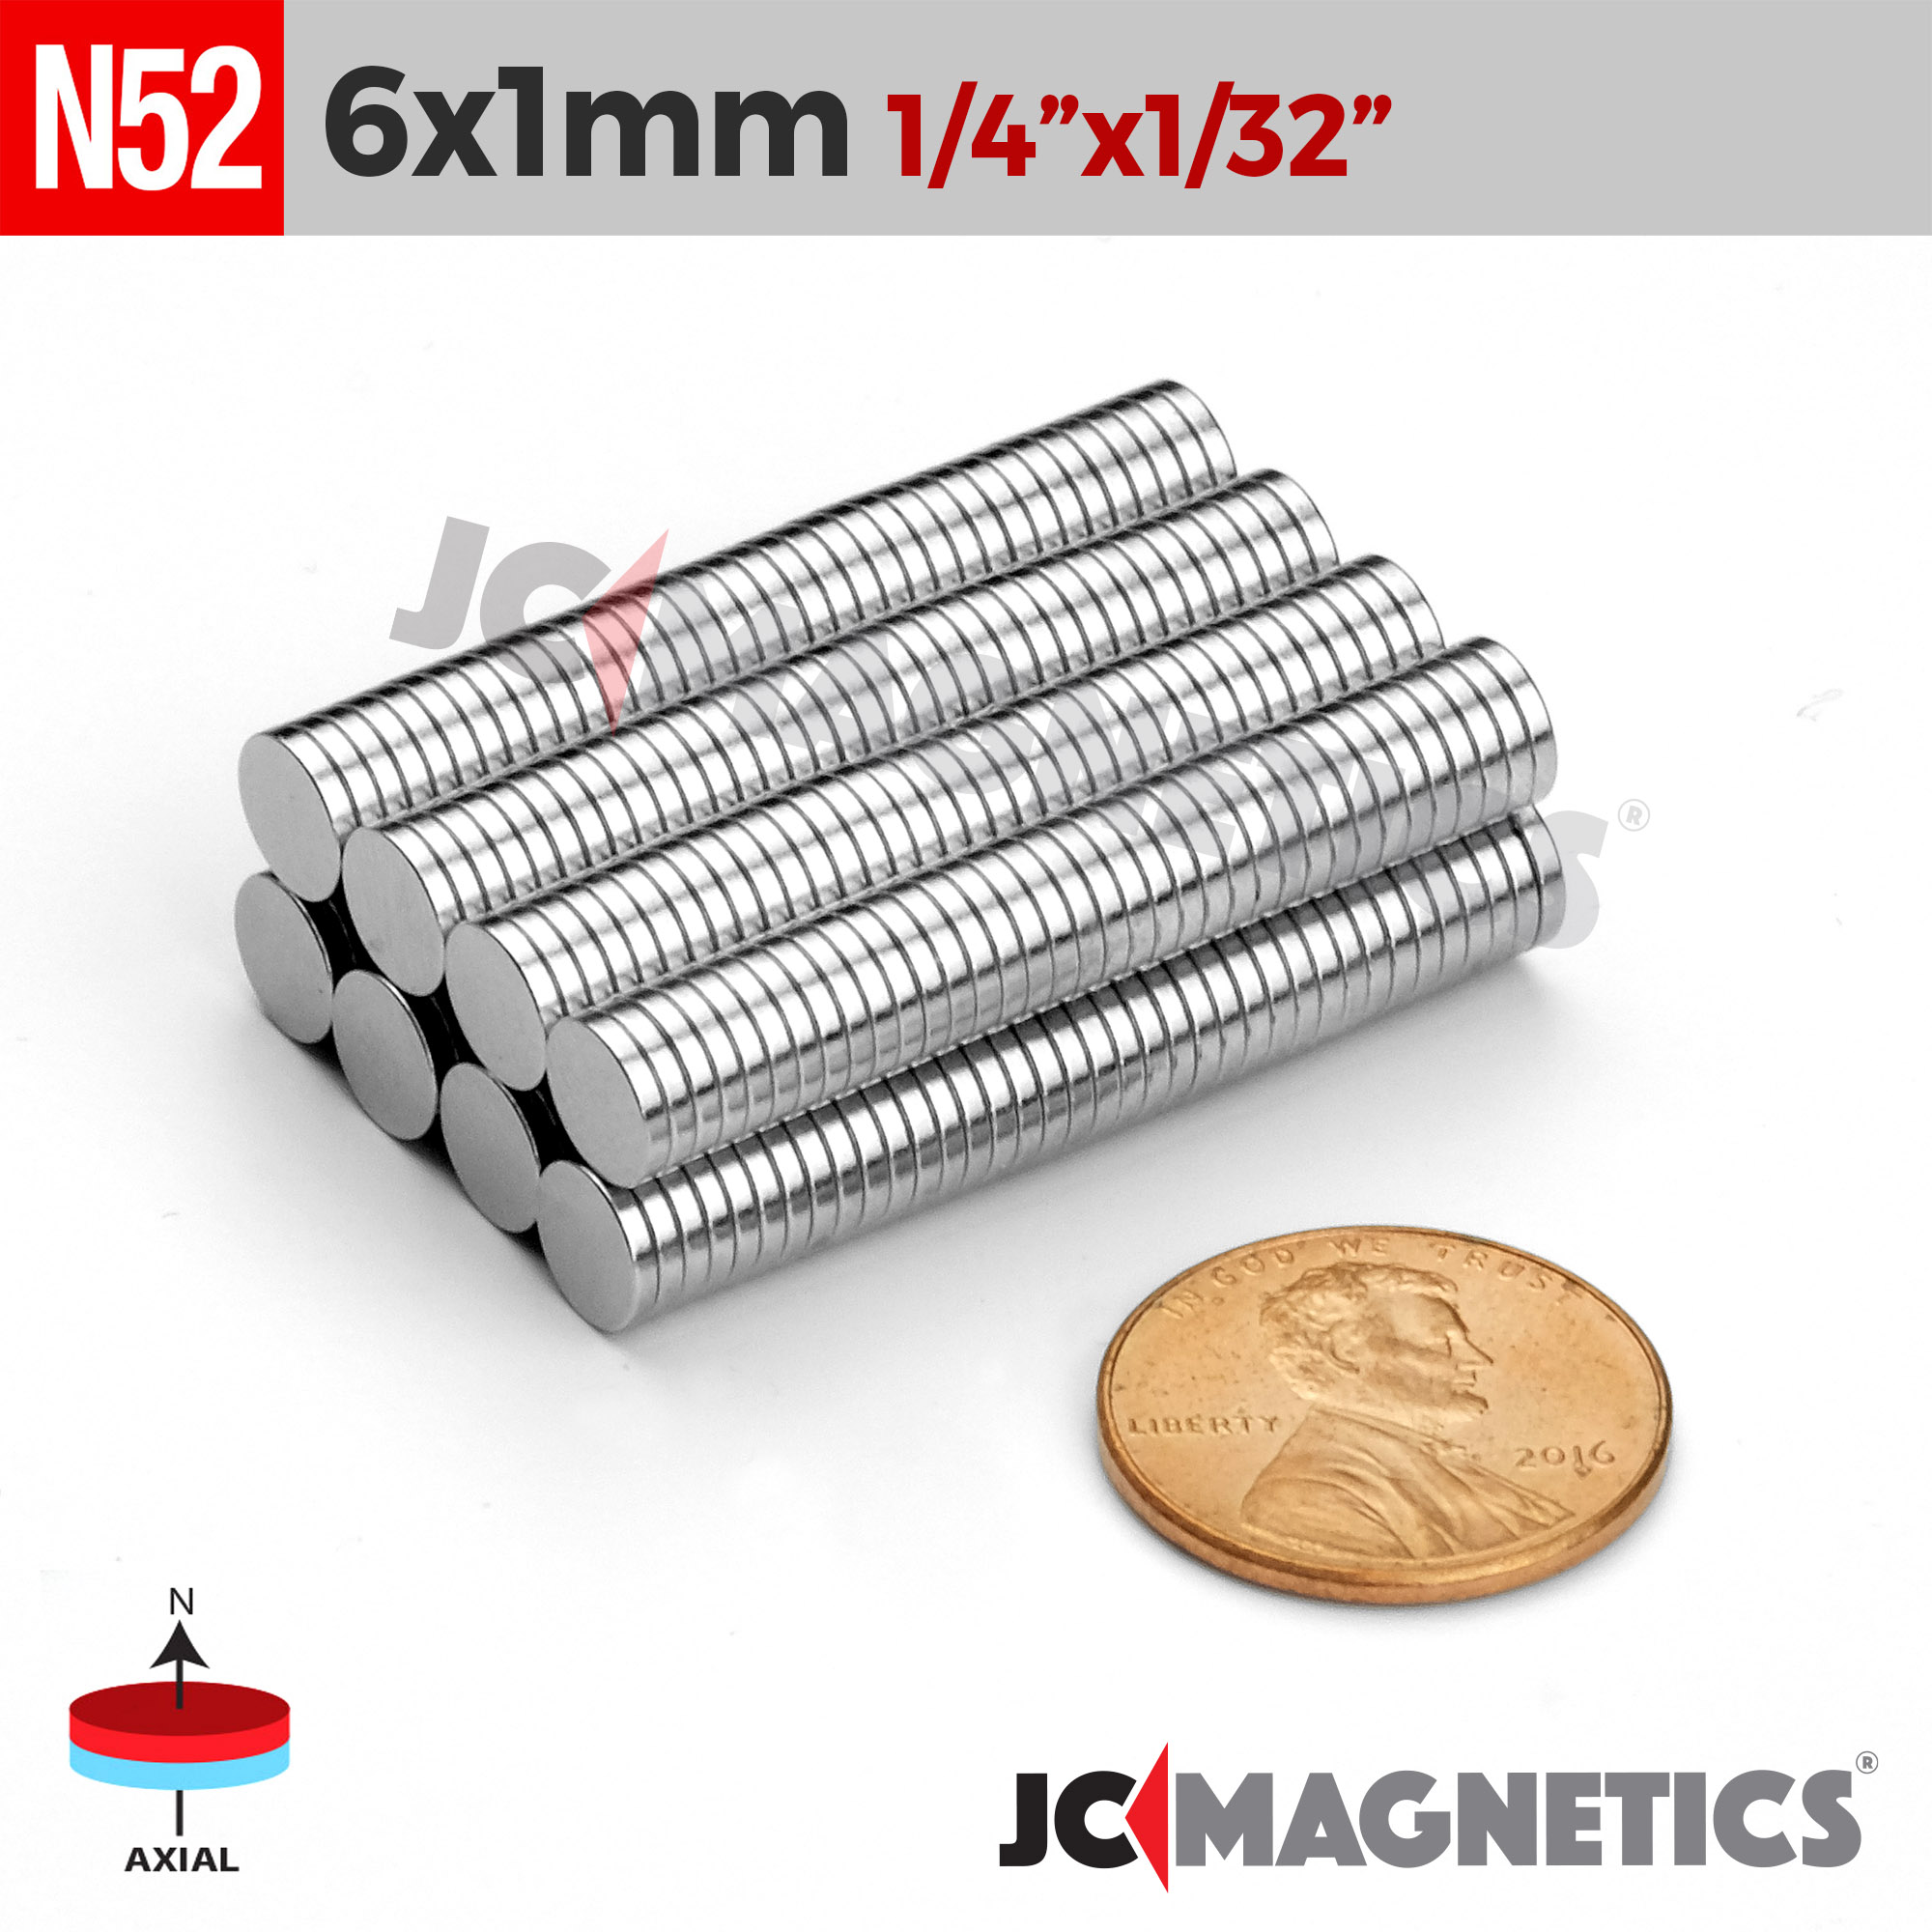 https://jc-magnetics.com/image/cache/catalog/magnets/6x1mm-disc-2000x2000.jpg